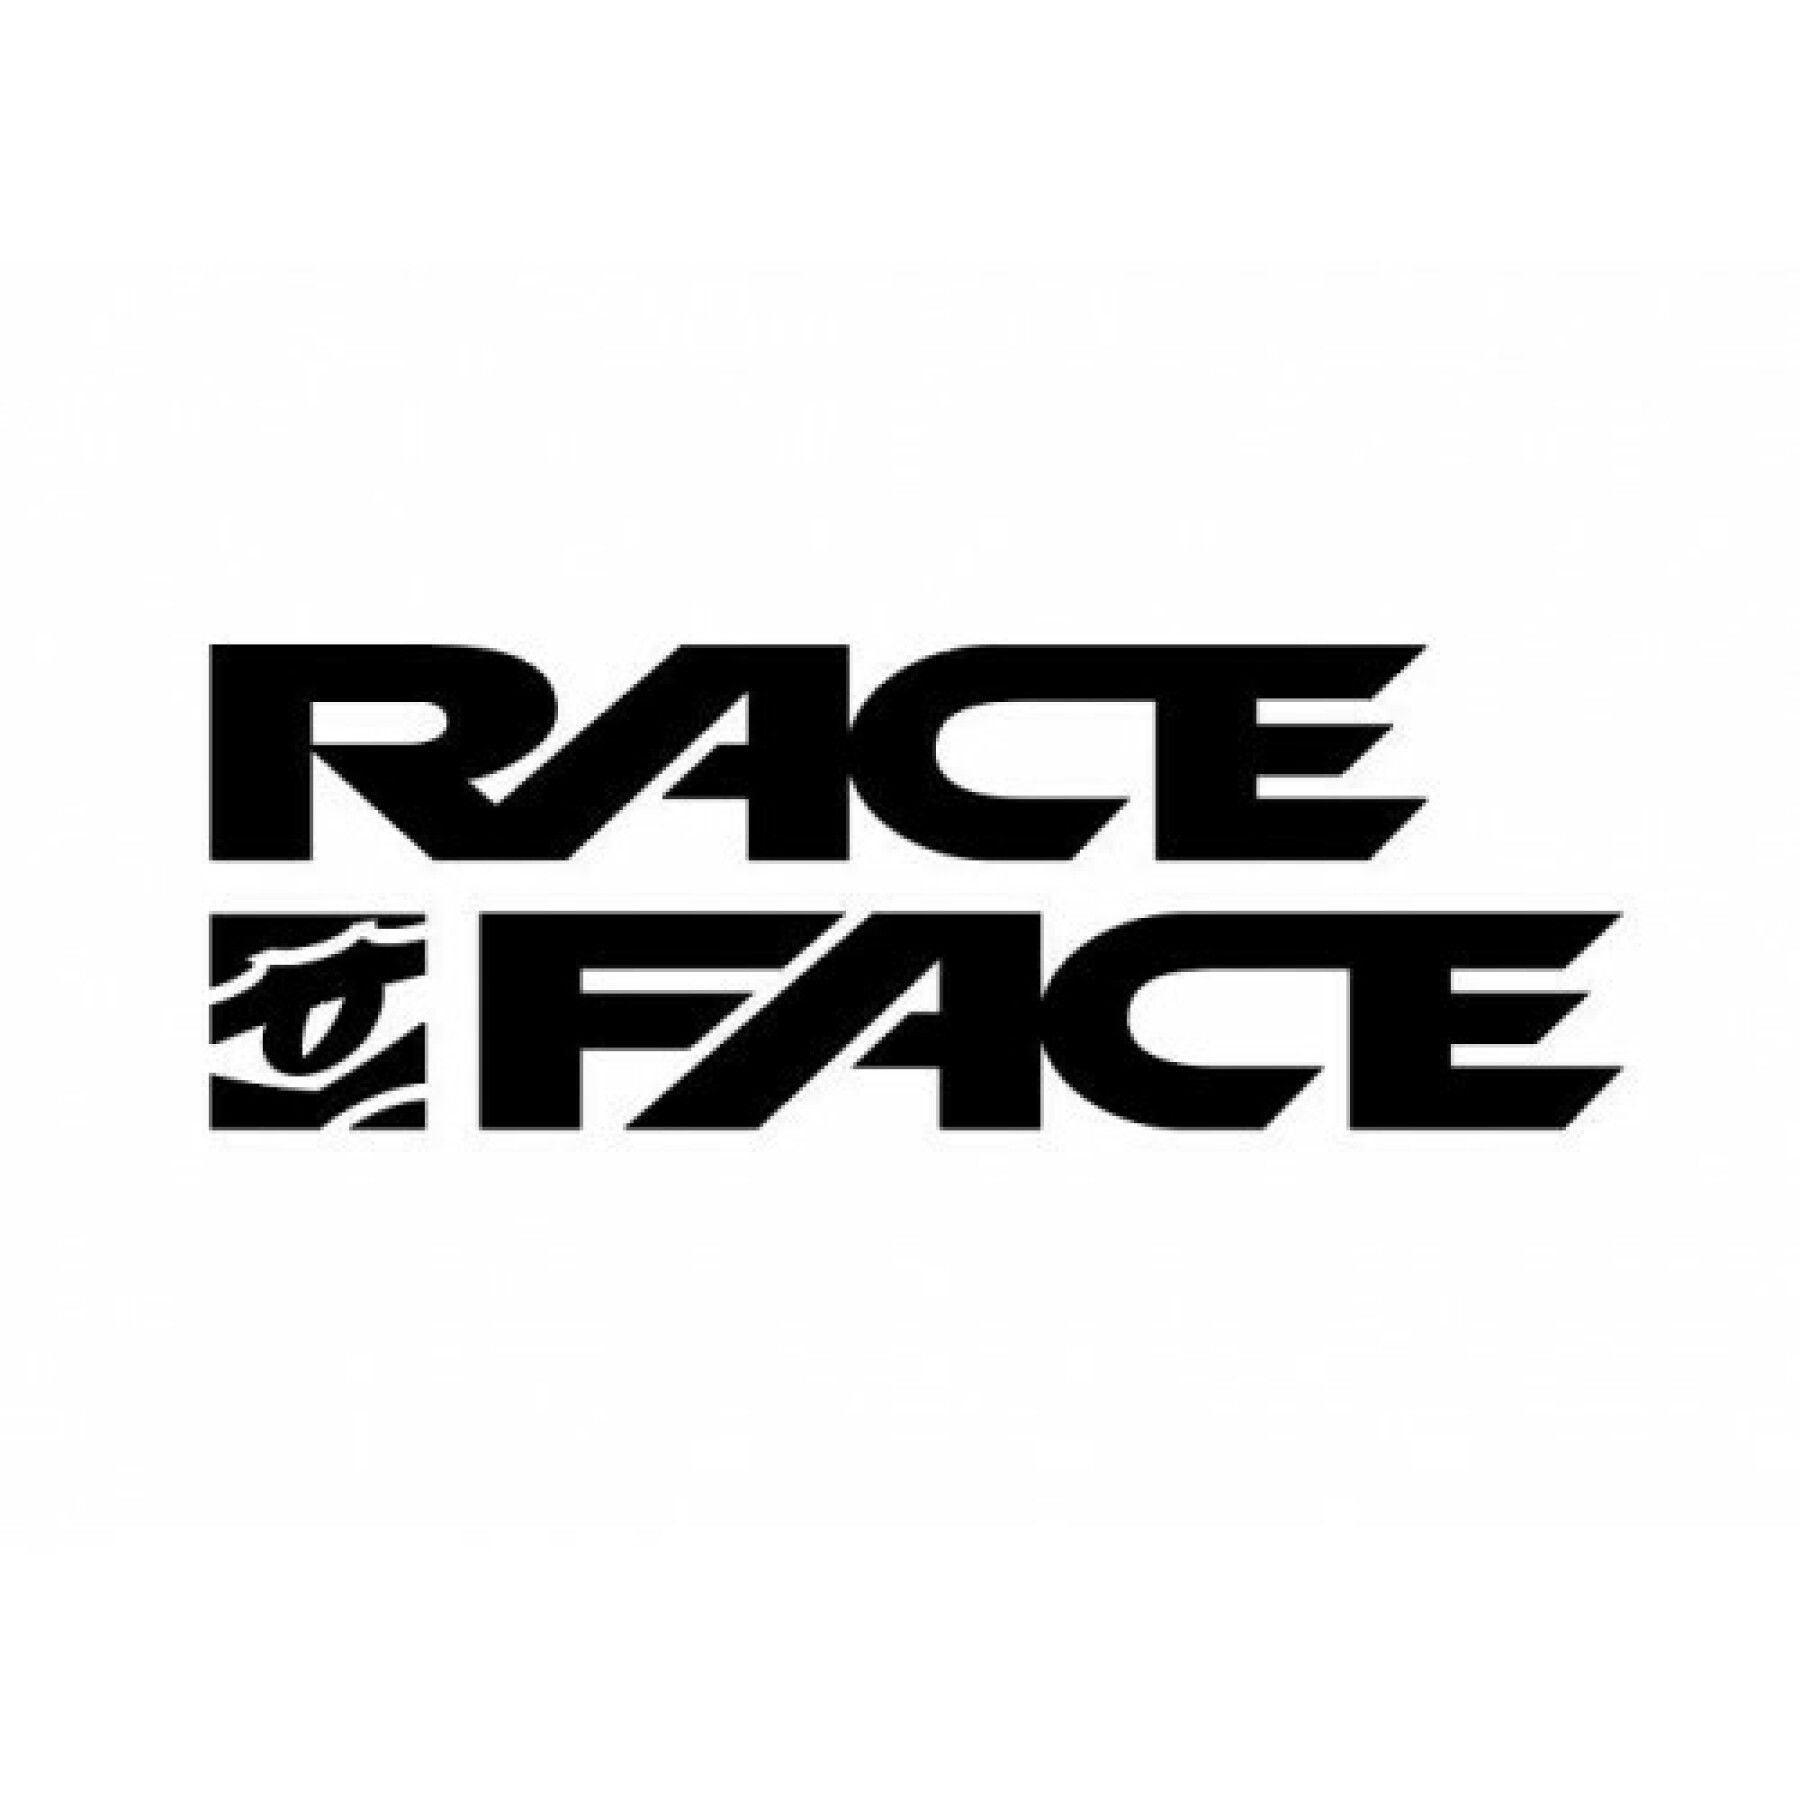 Llanta Race Face arc offset - 35 - 29 - 28t